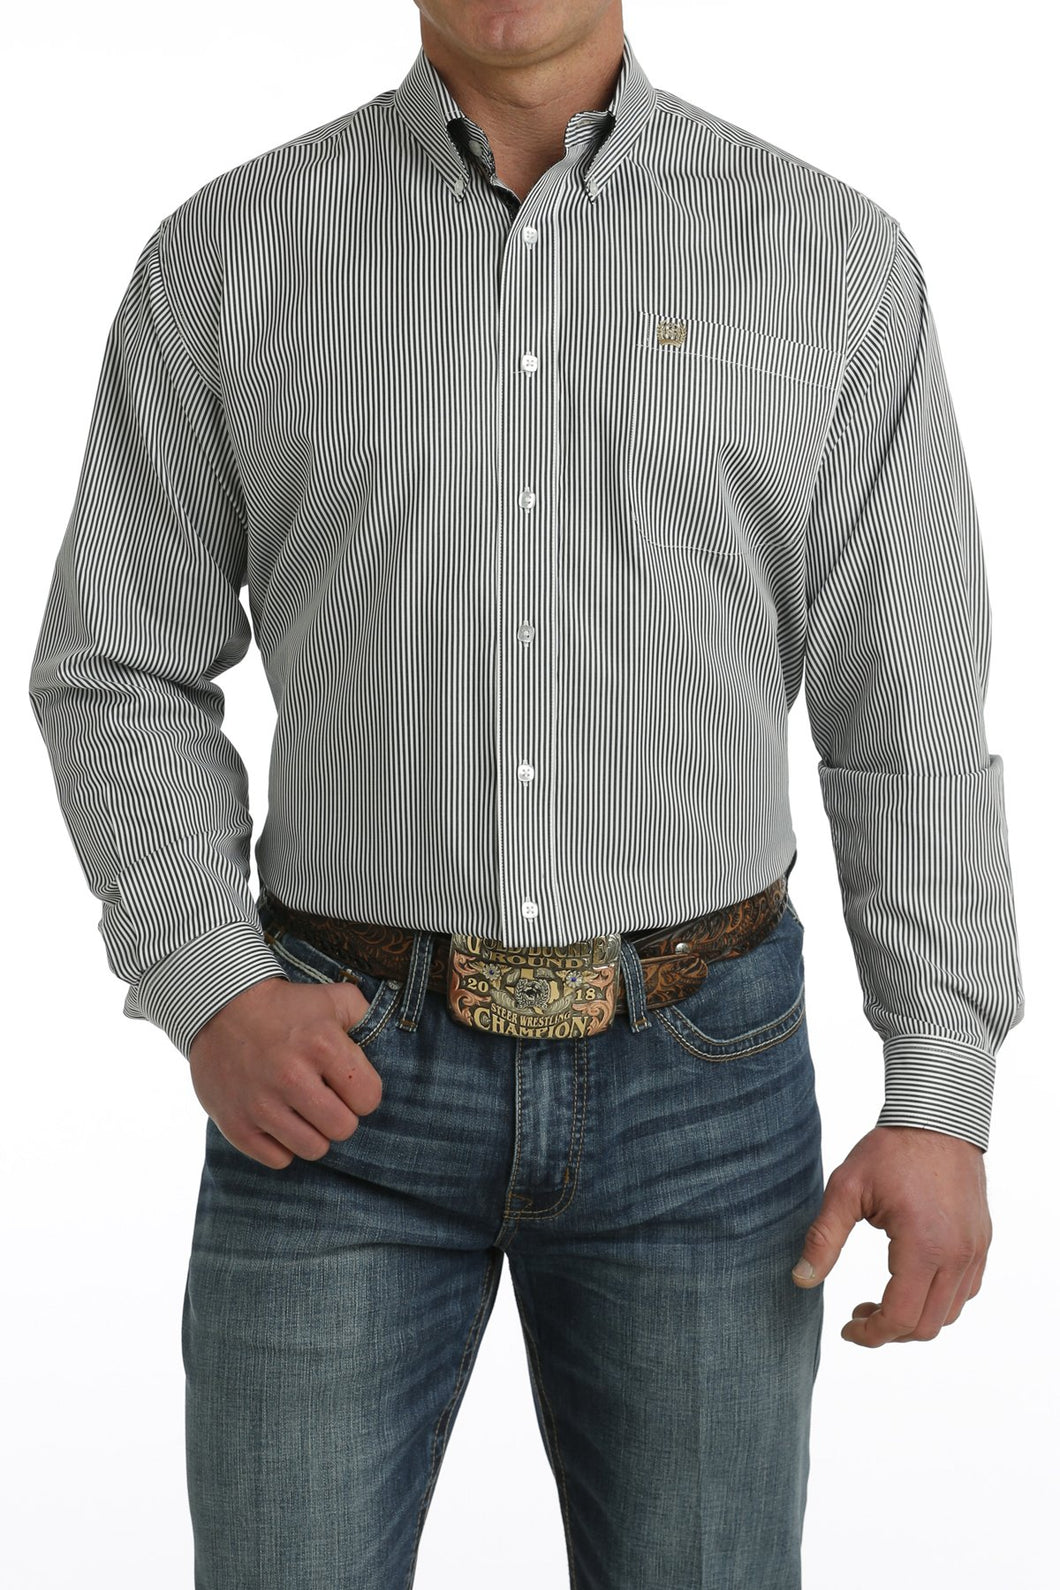 Cinch Men's Tencel Black & White Pinstripe Western Shirt